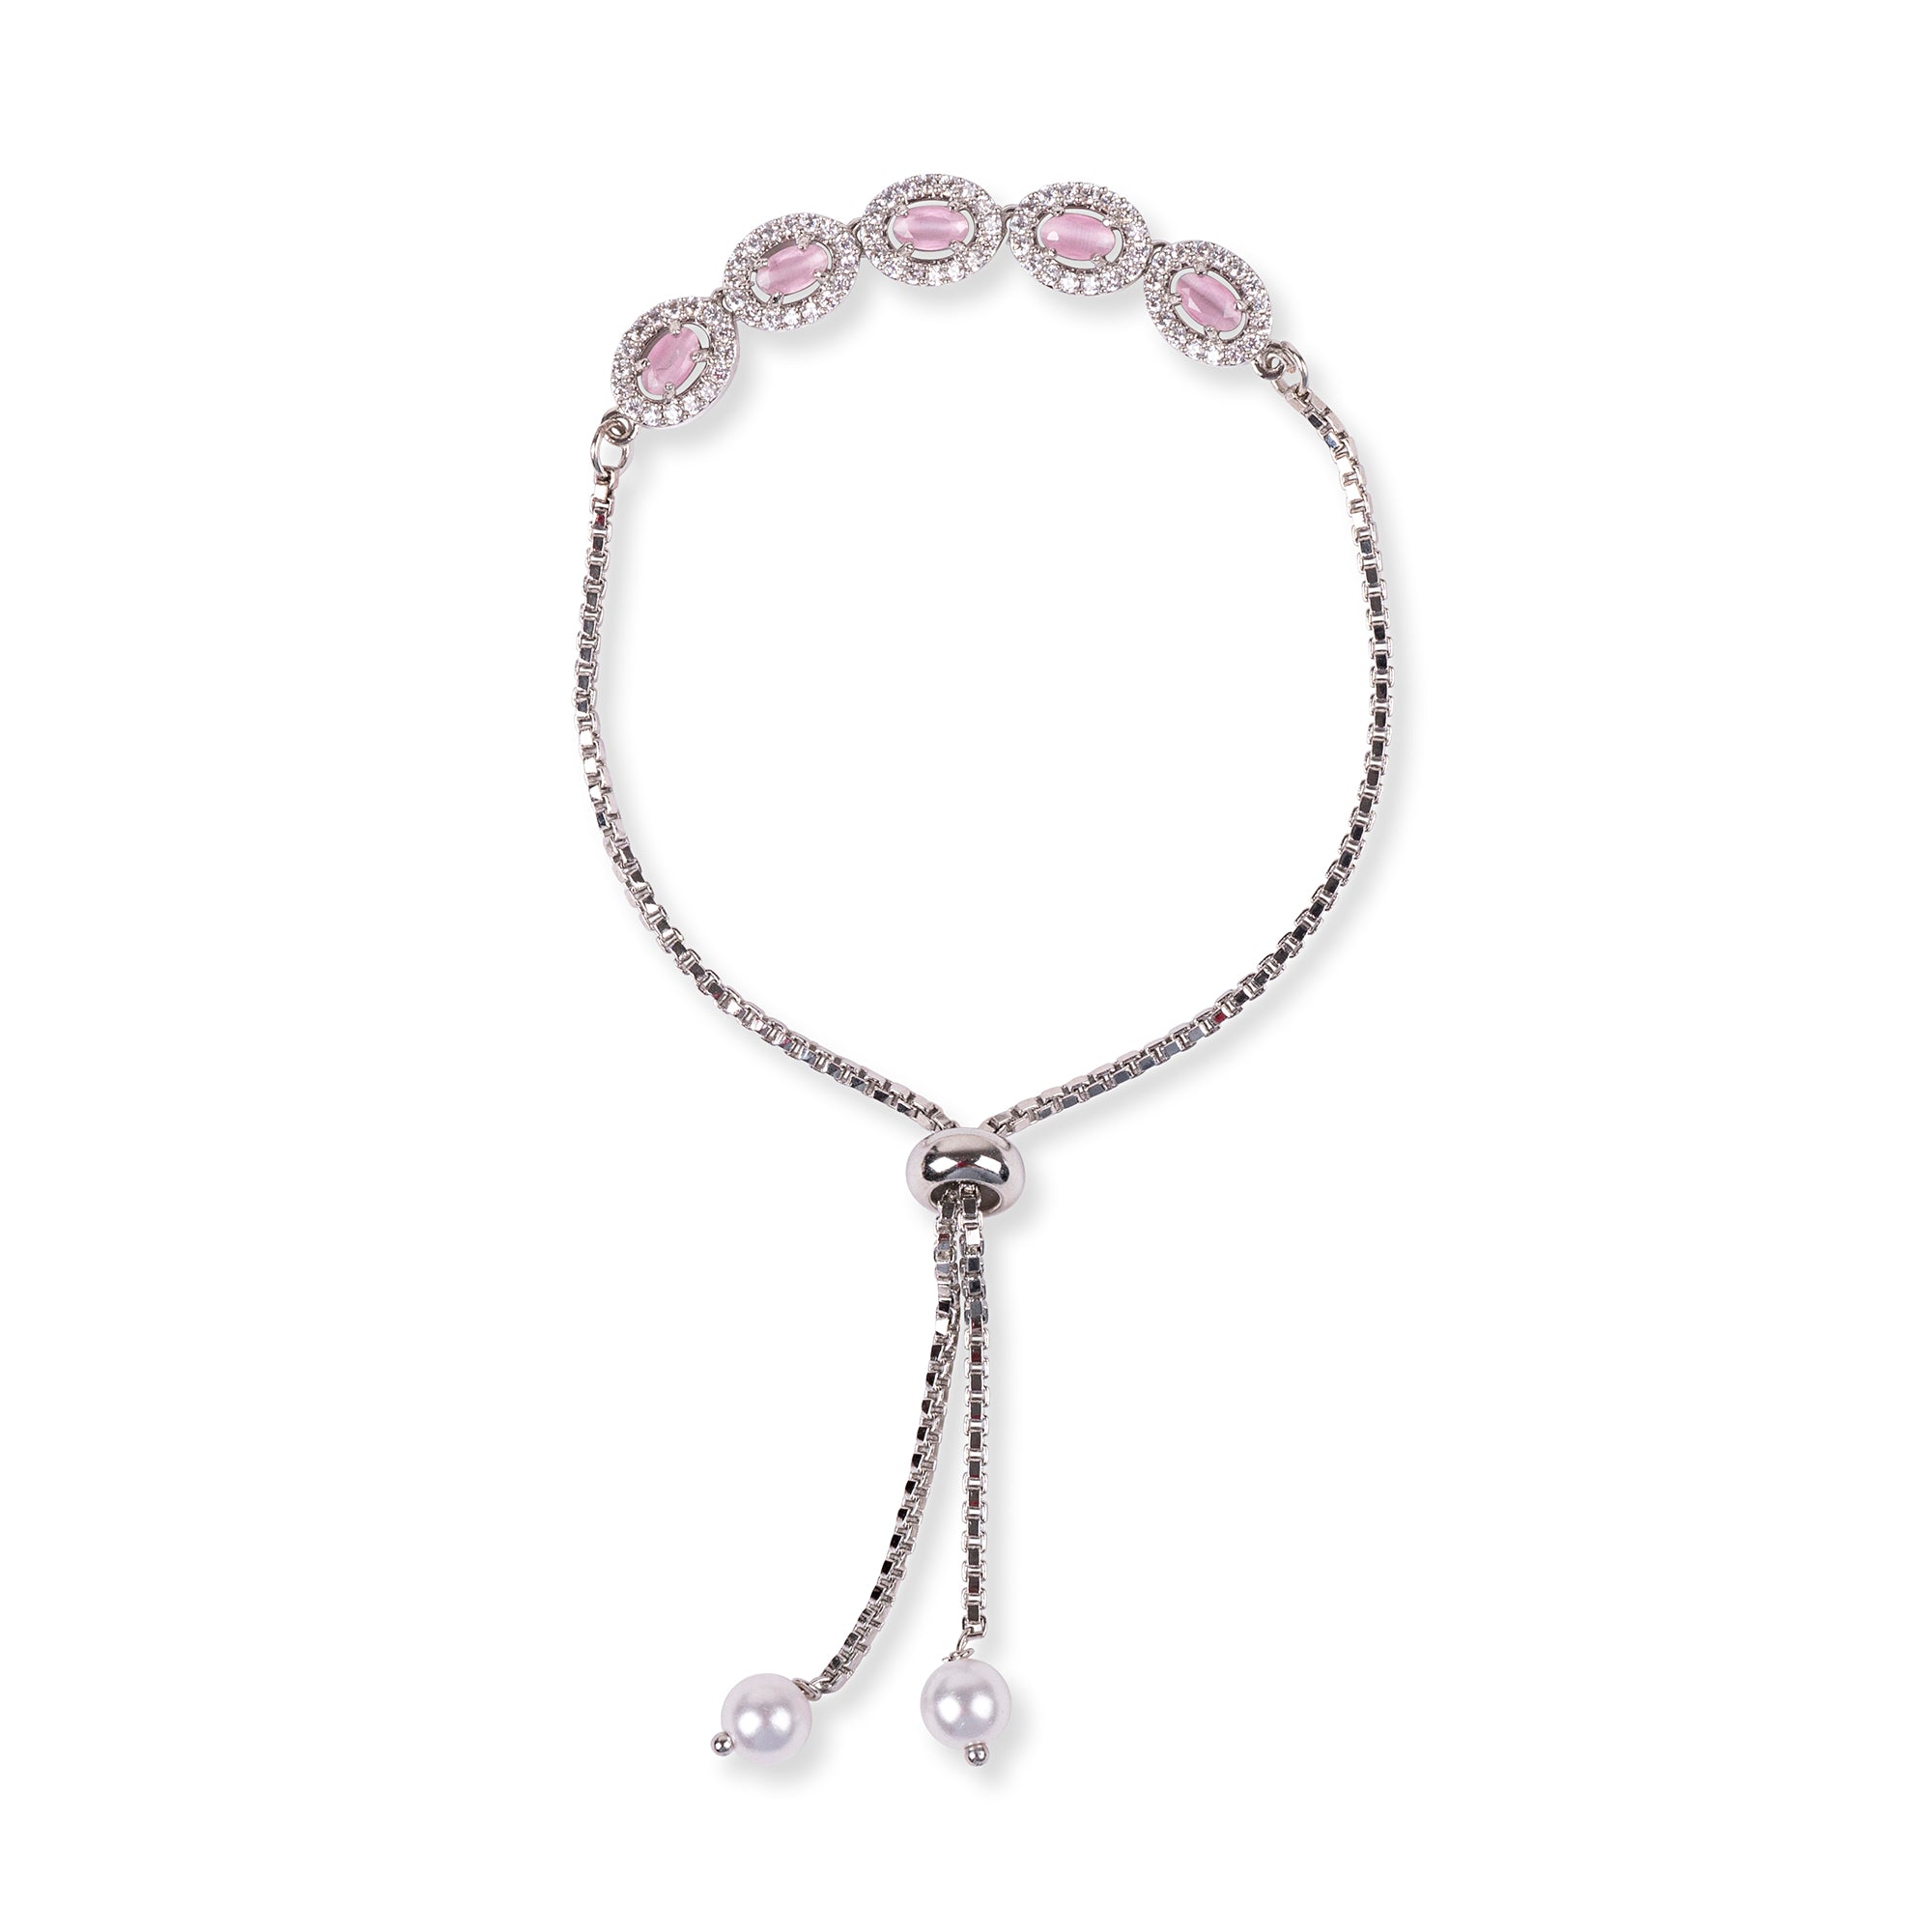 Lola Cubic Zirconia Bracelet in Light Pink and Rhodium